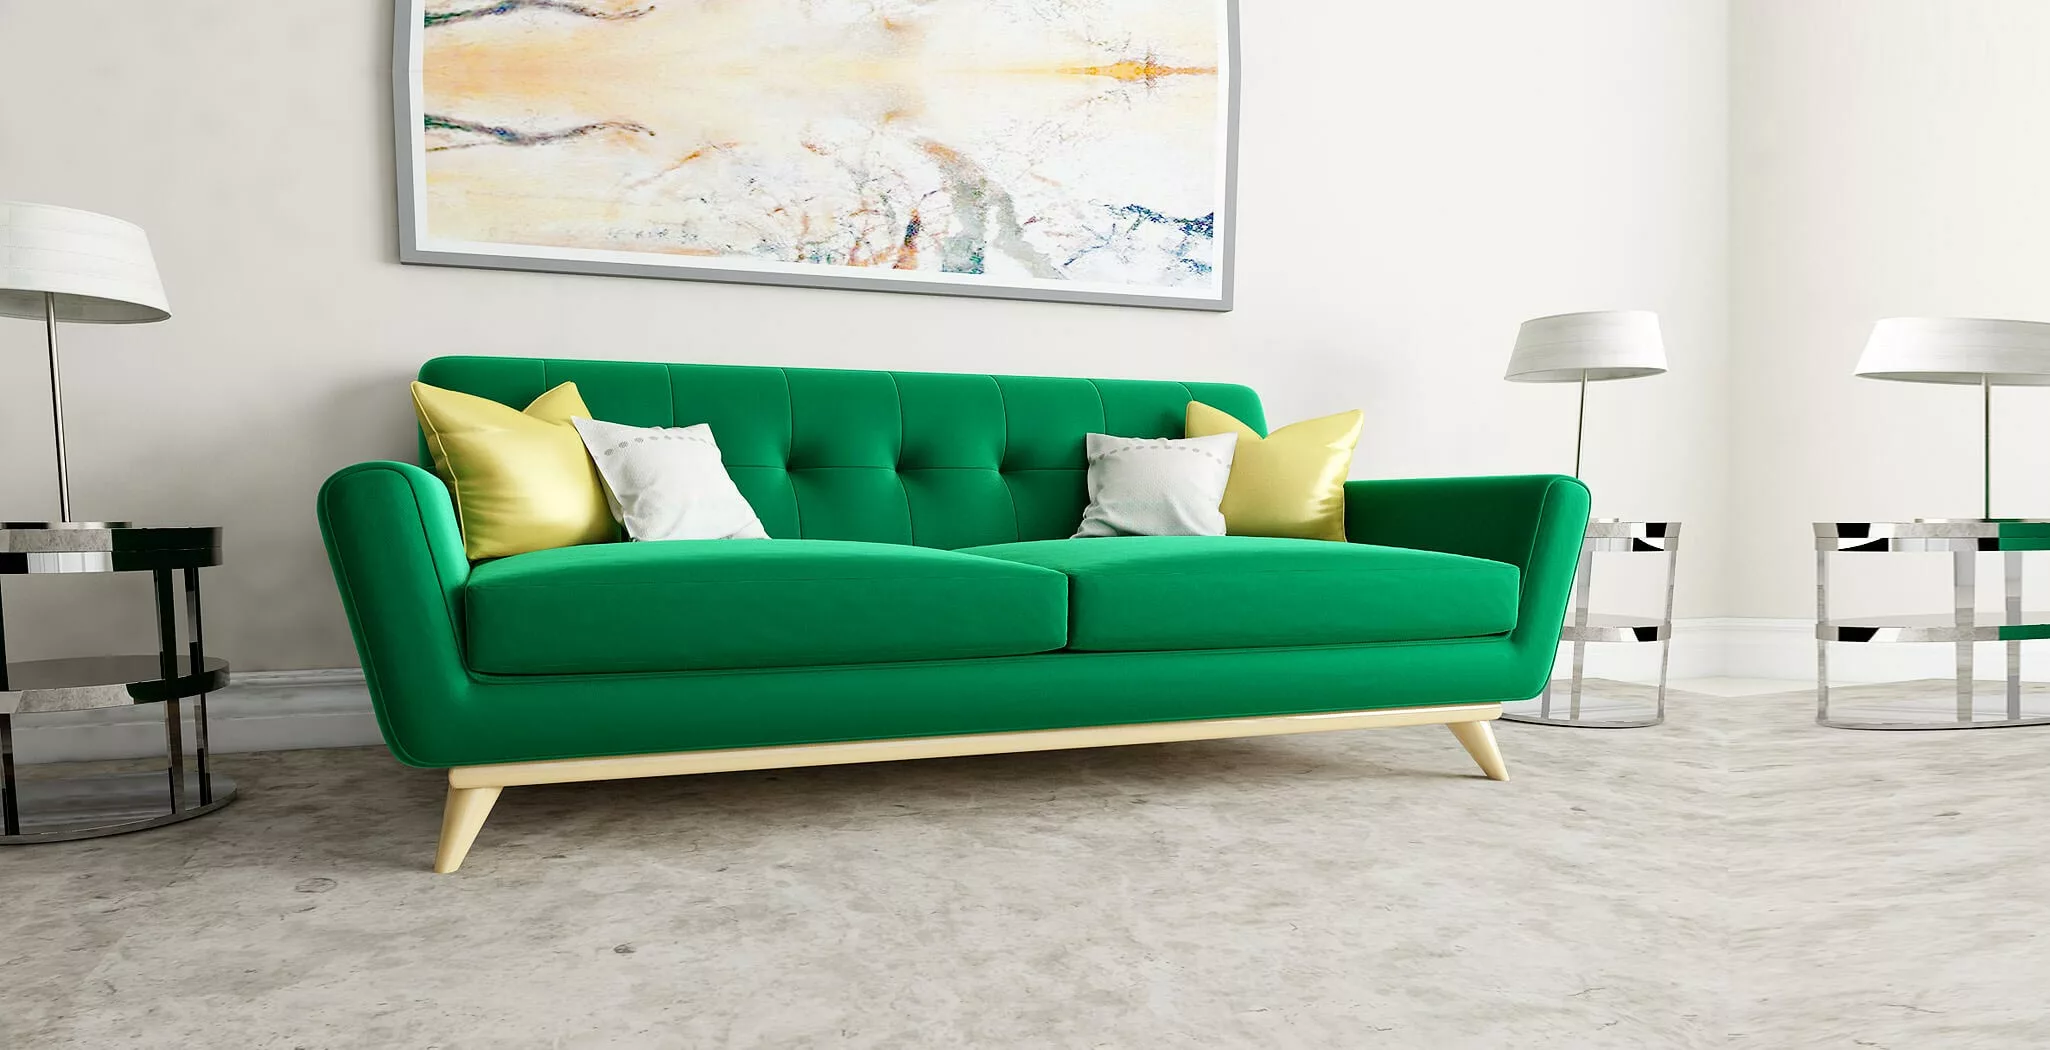 DreamSofa custom built sofas